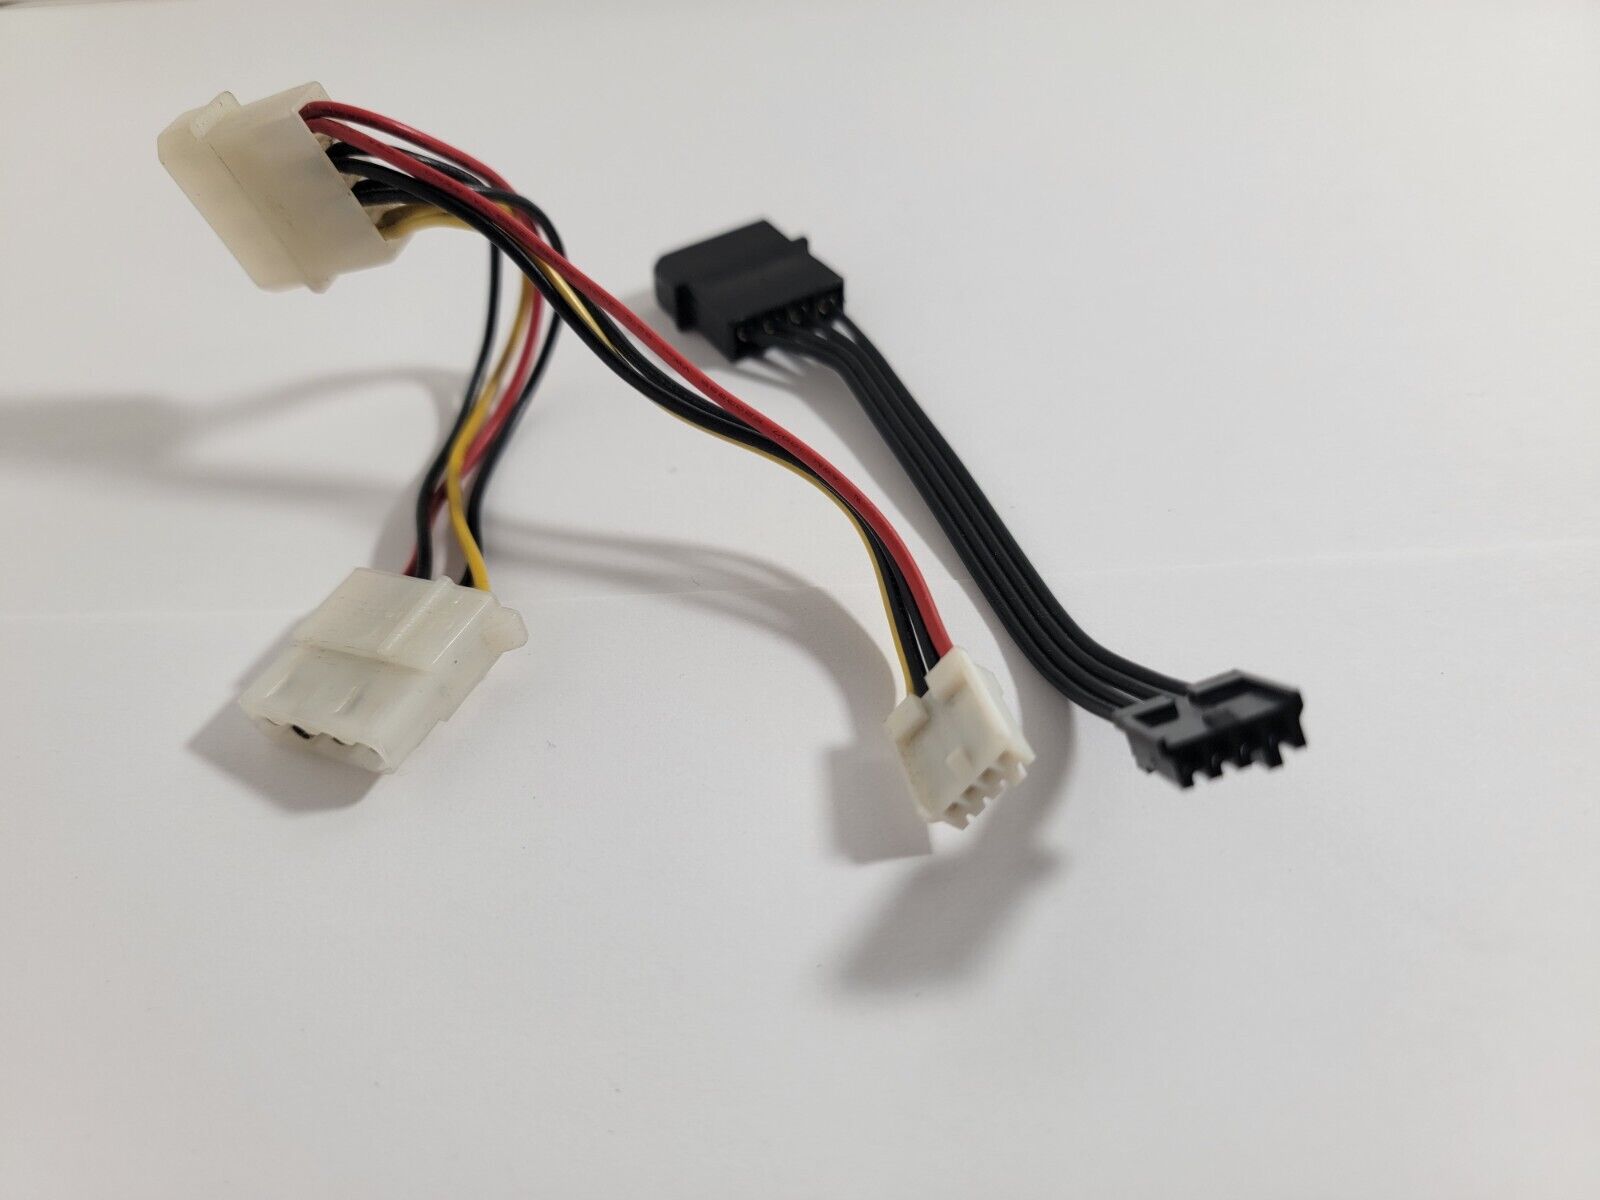 2x ACARD AEC-7720U - Board Power Cable Connectors, 4-Pin To Molex - Untested